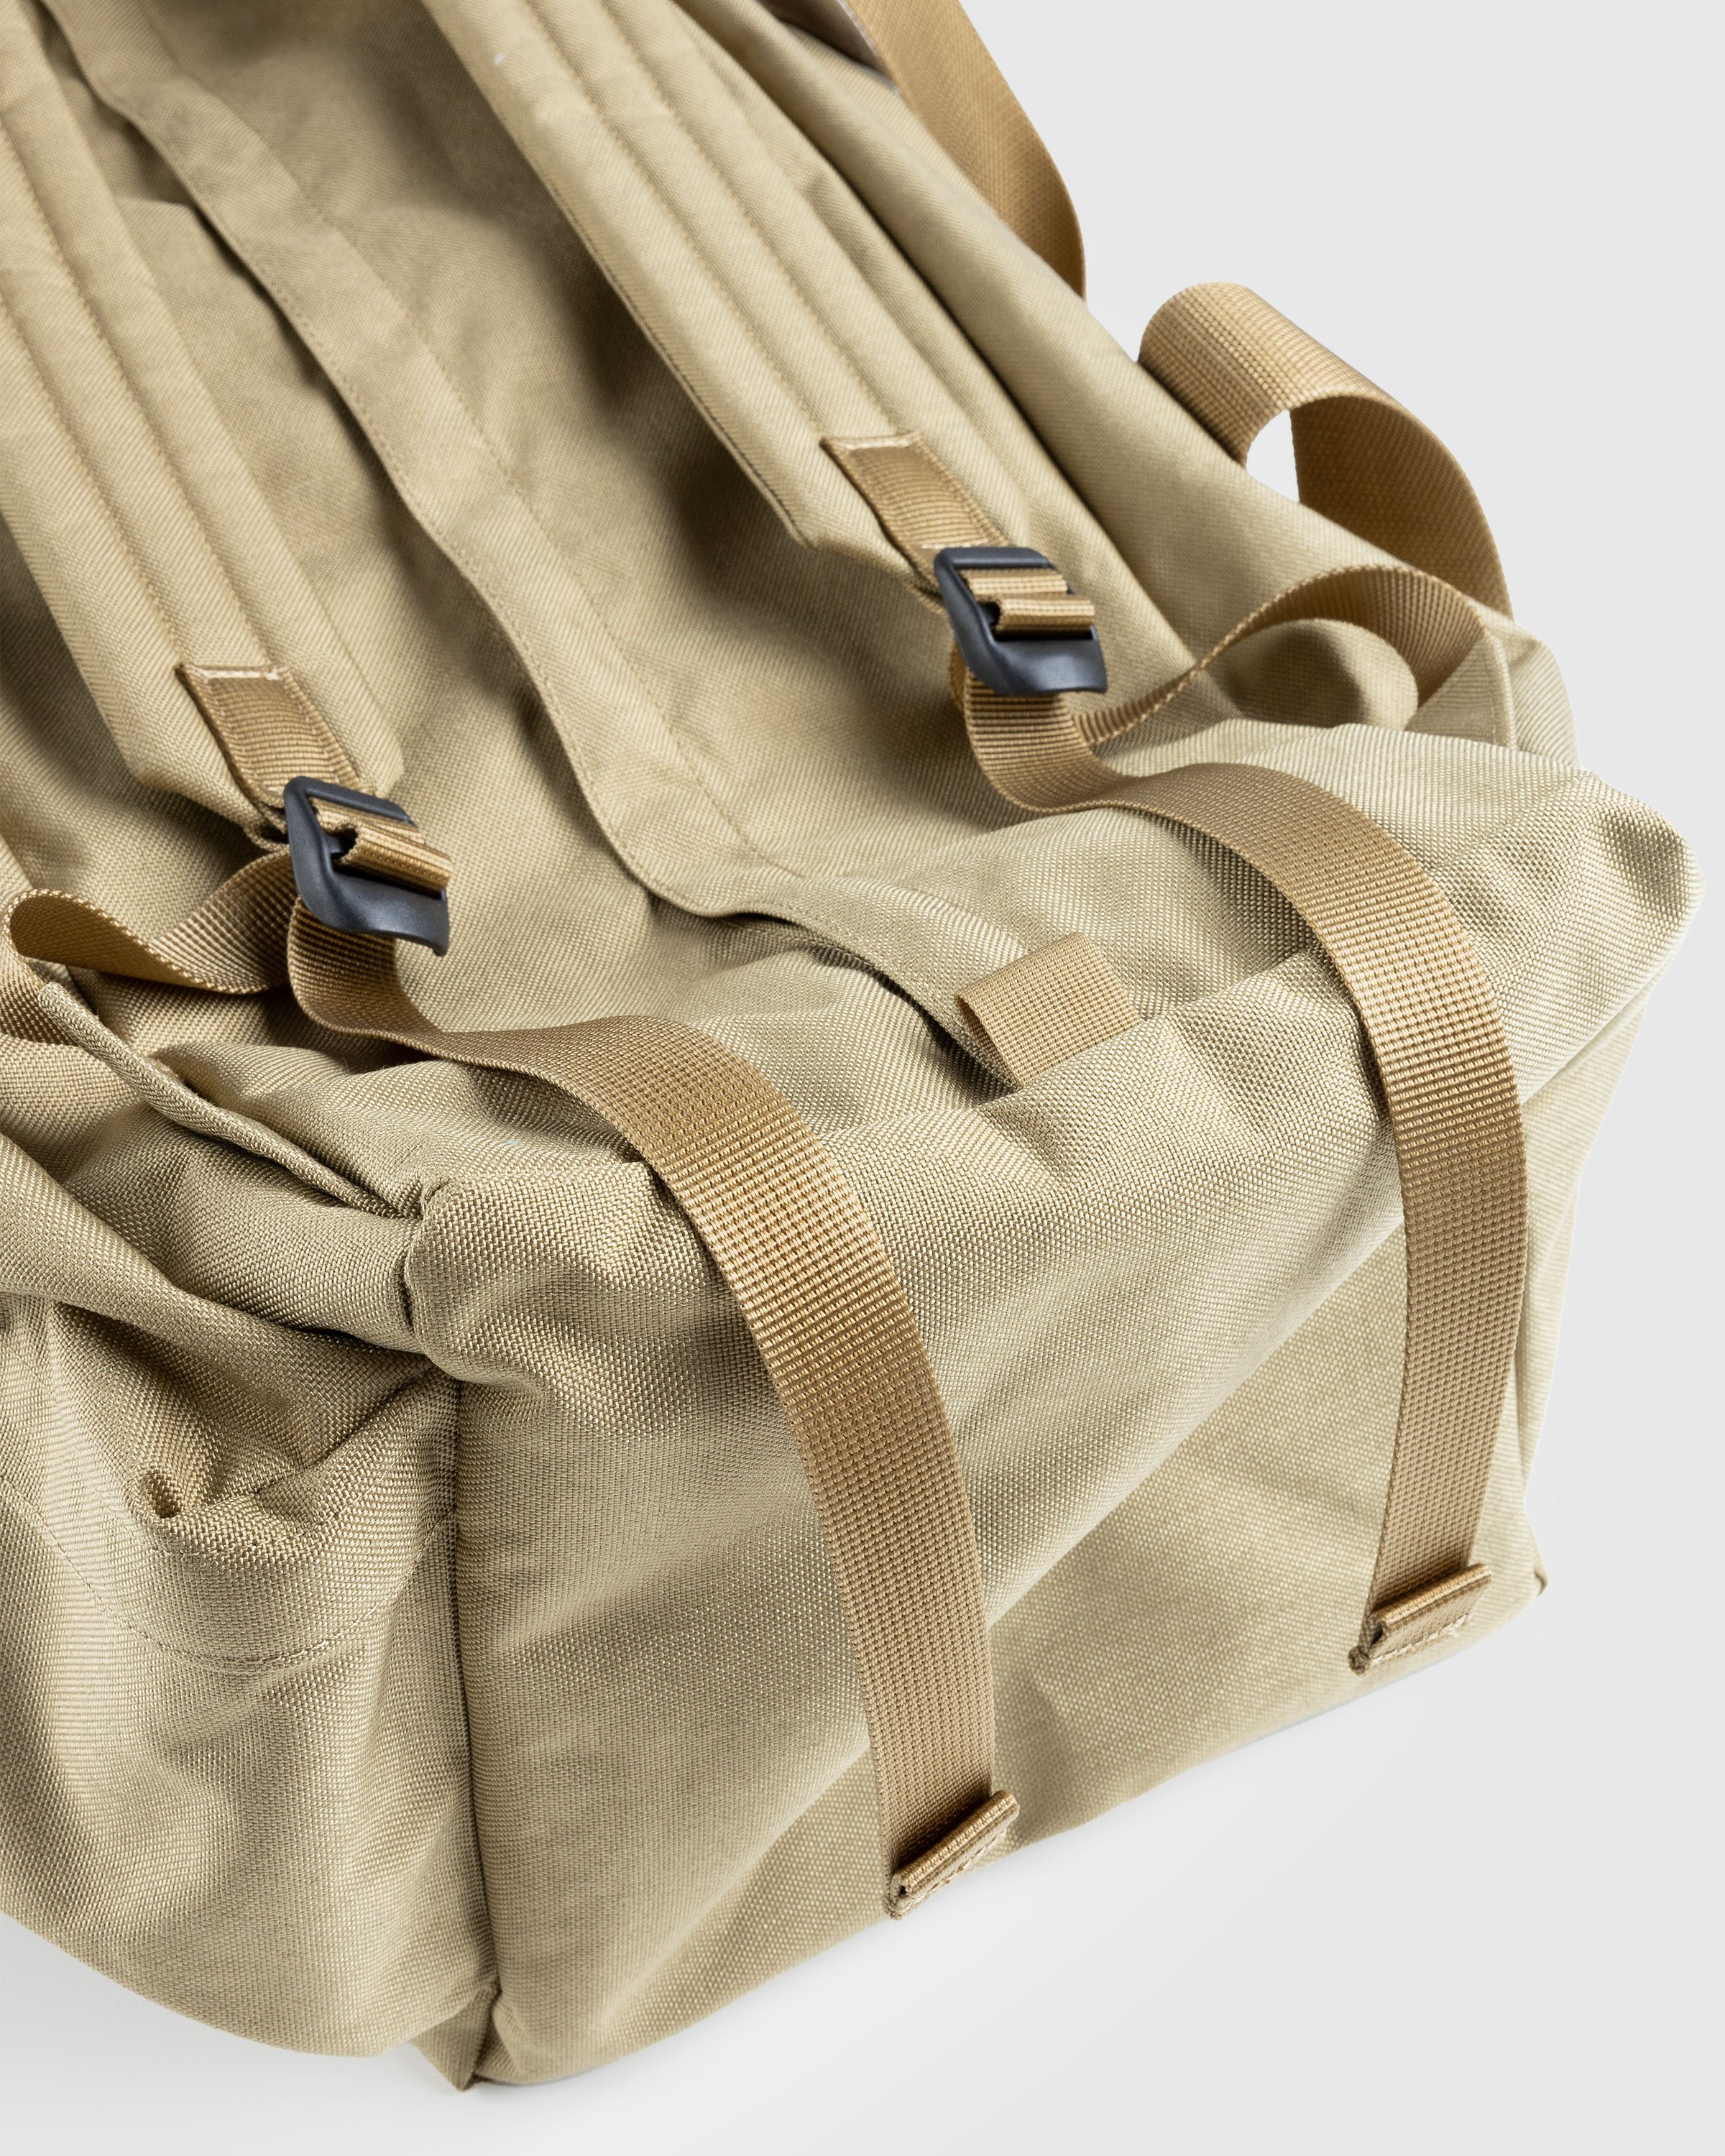 Auralee - Boston Bag Made By Aeta Beige - Accessories - Beige - Image 5